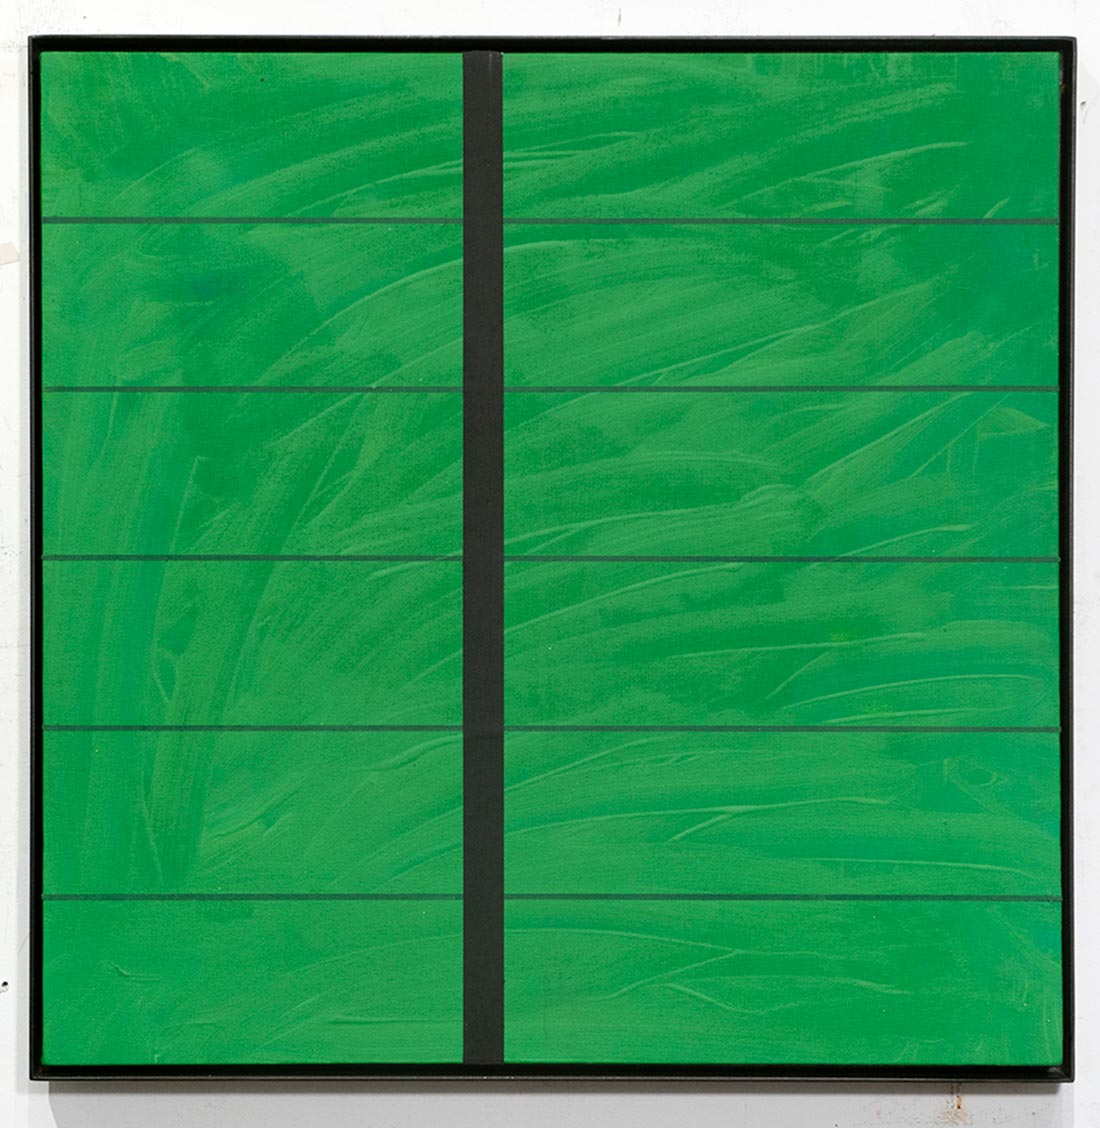 Rene Pierre Allain
Composition no.25 (Green)